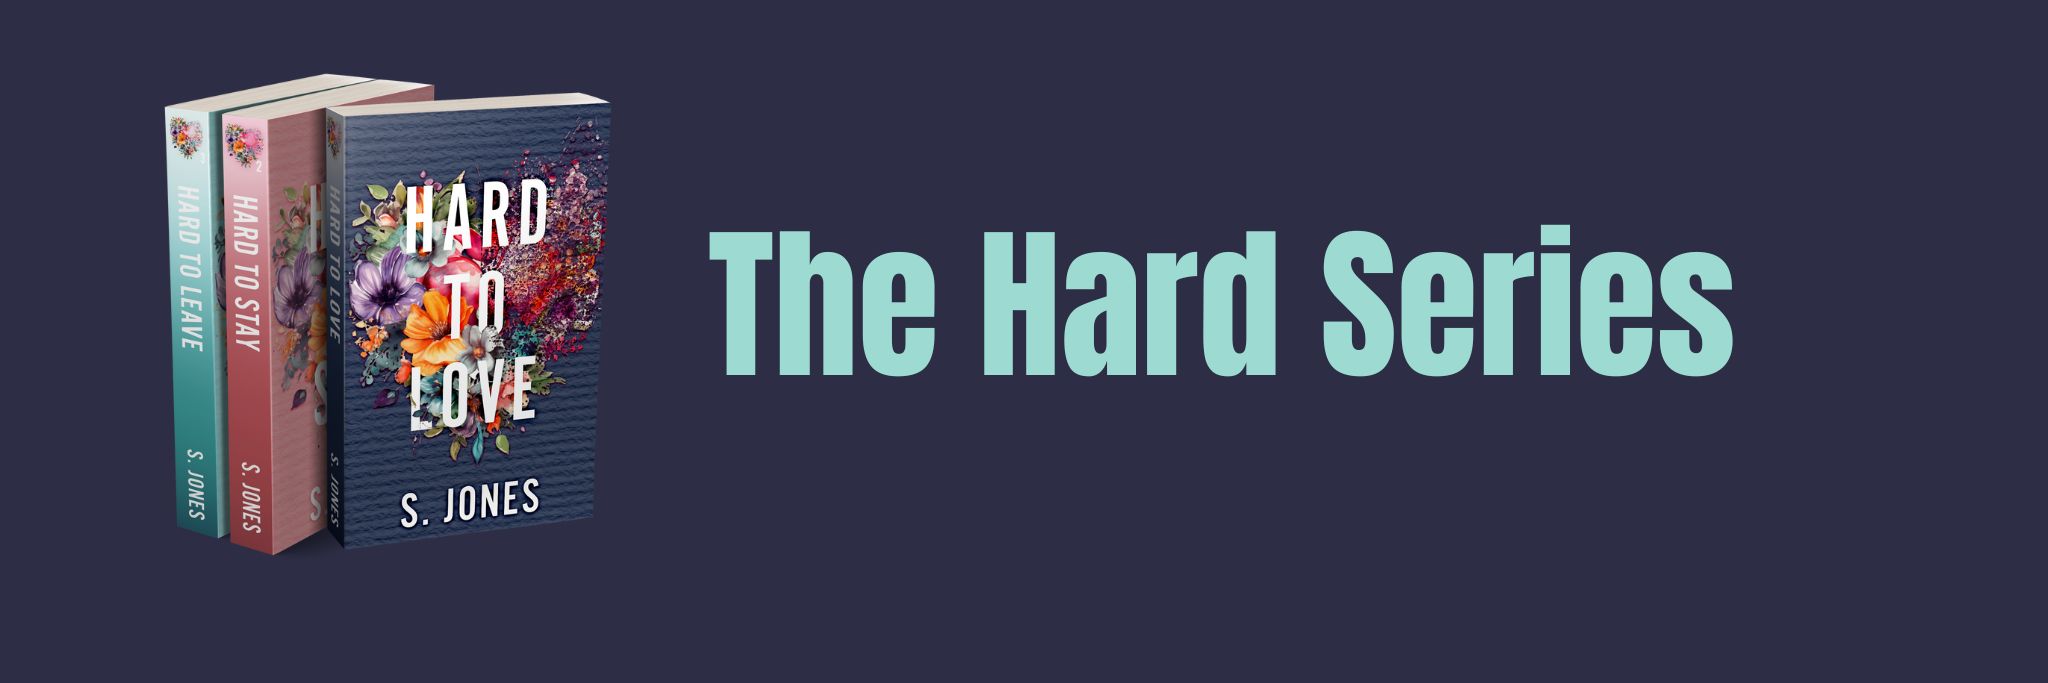 The Hard Series